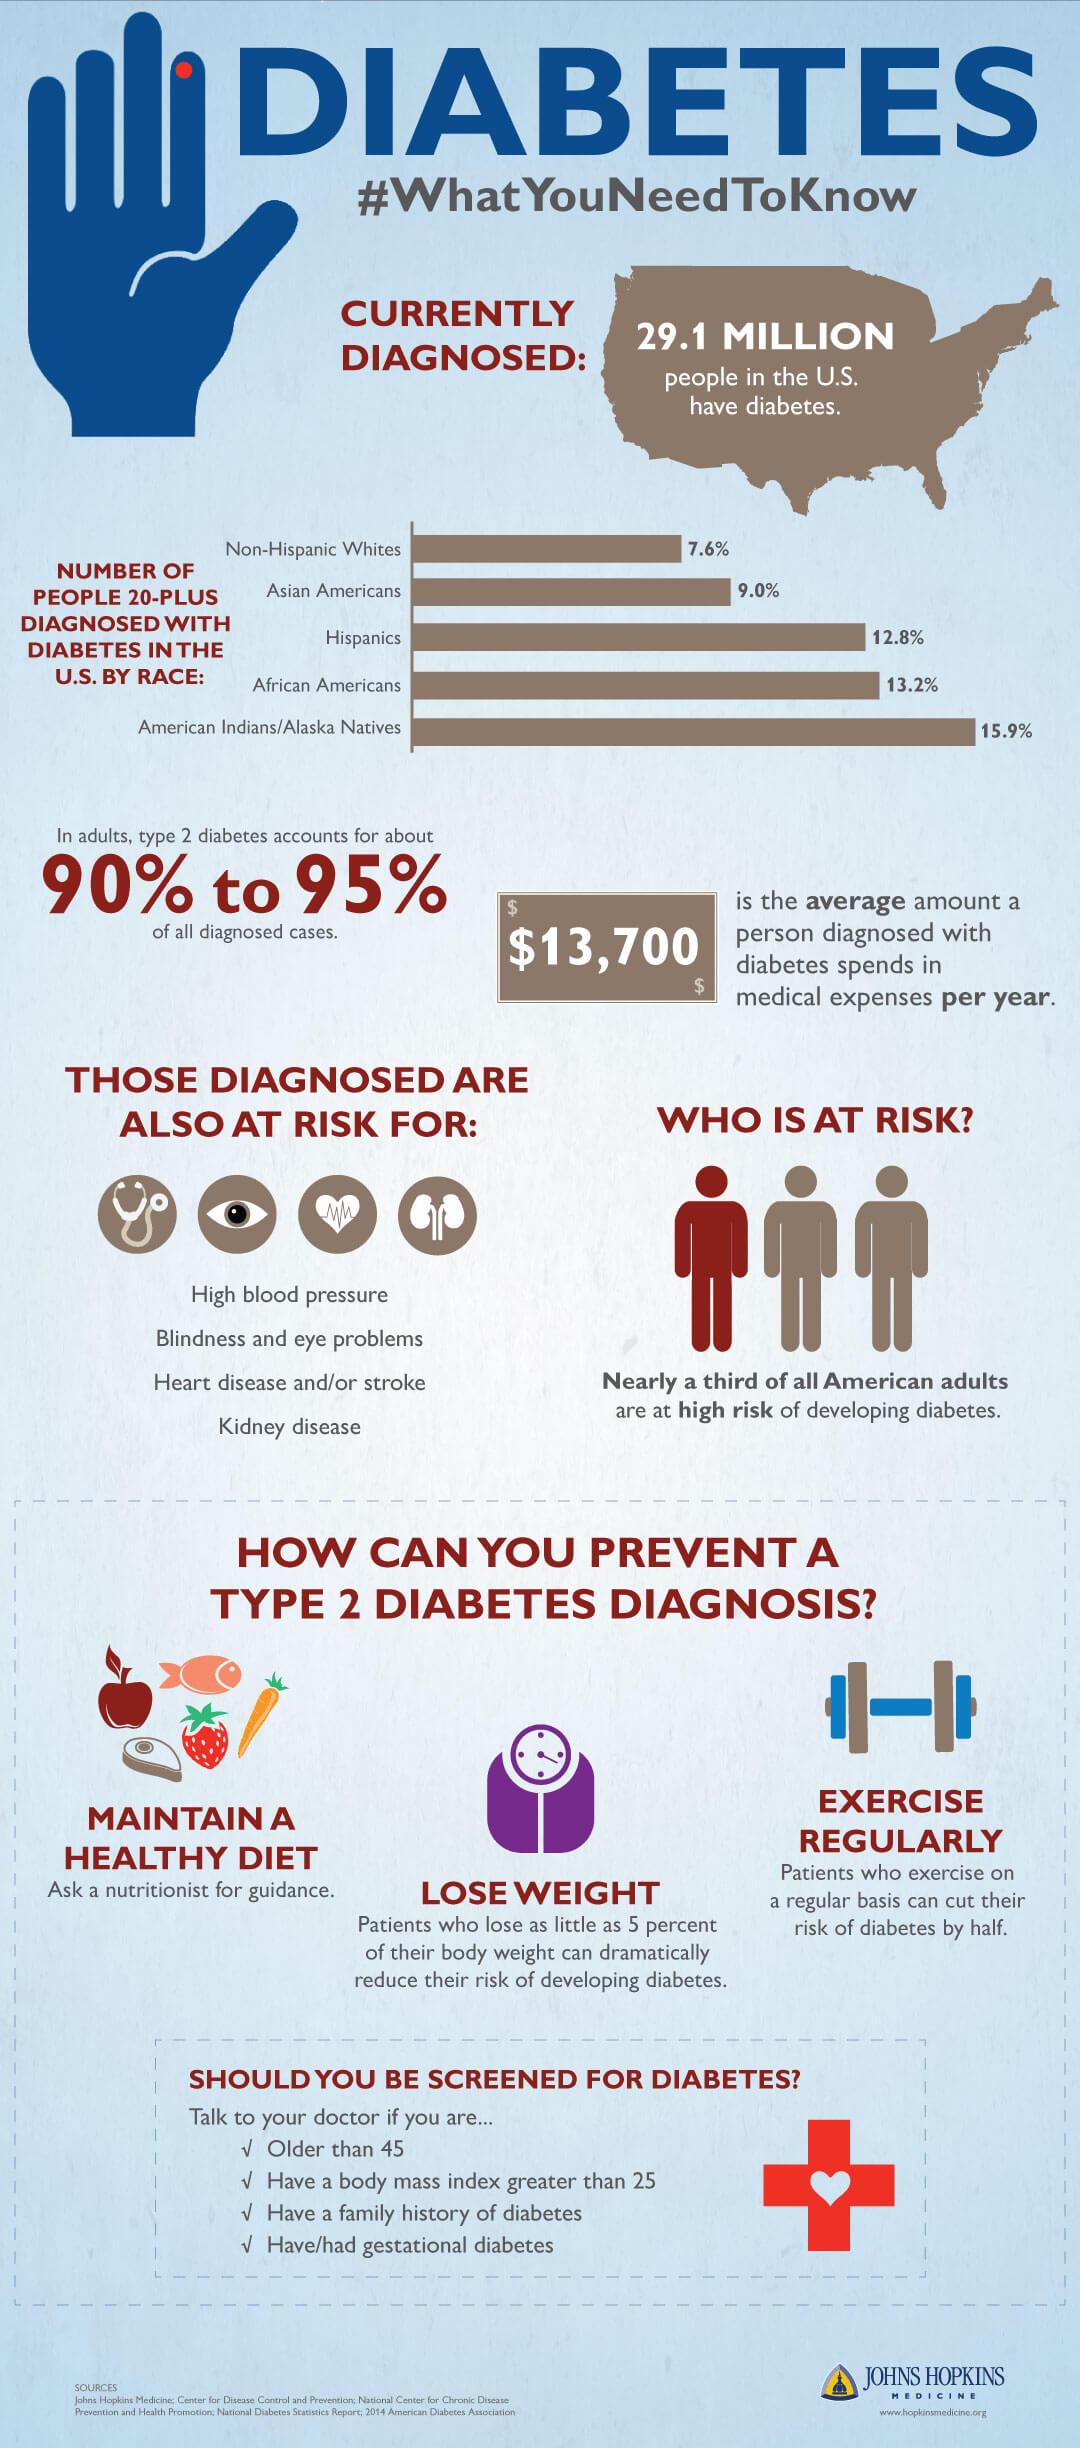 diabetes-infographic-johns-hopkins-medicine